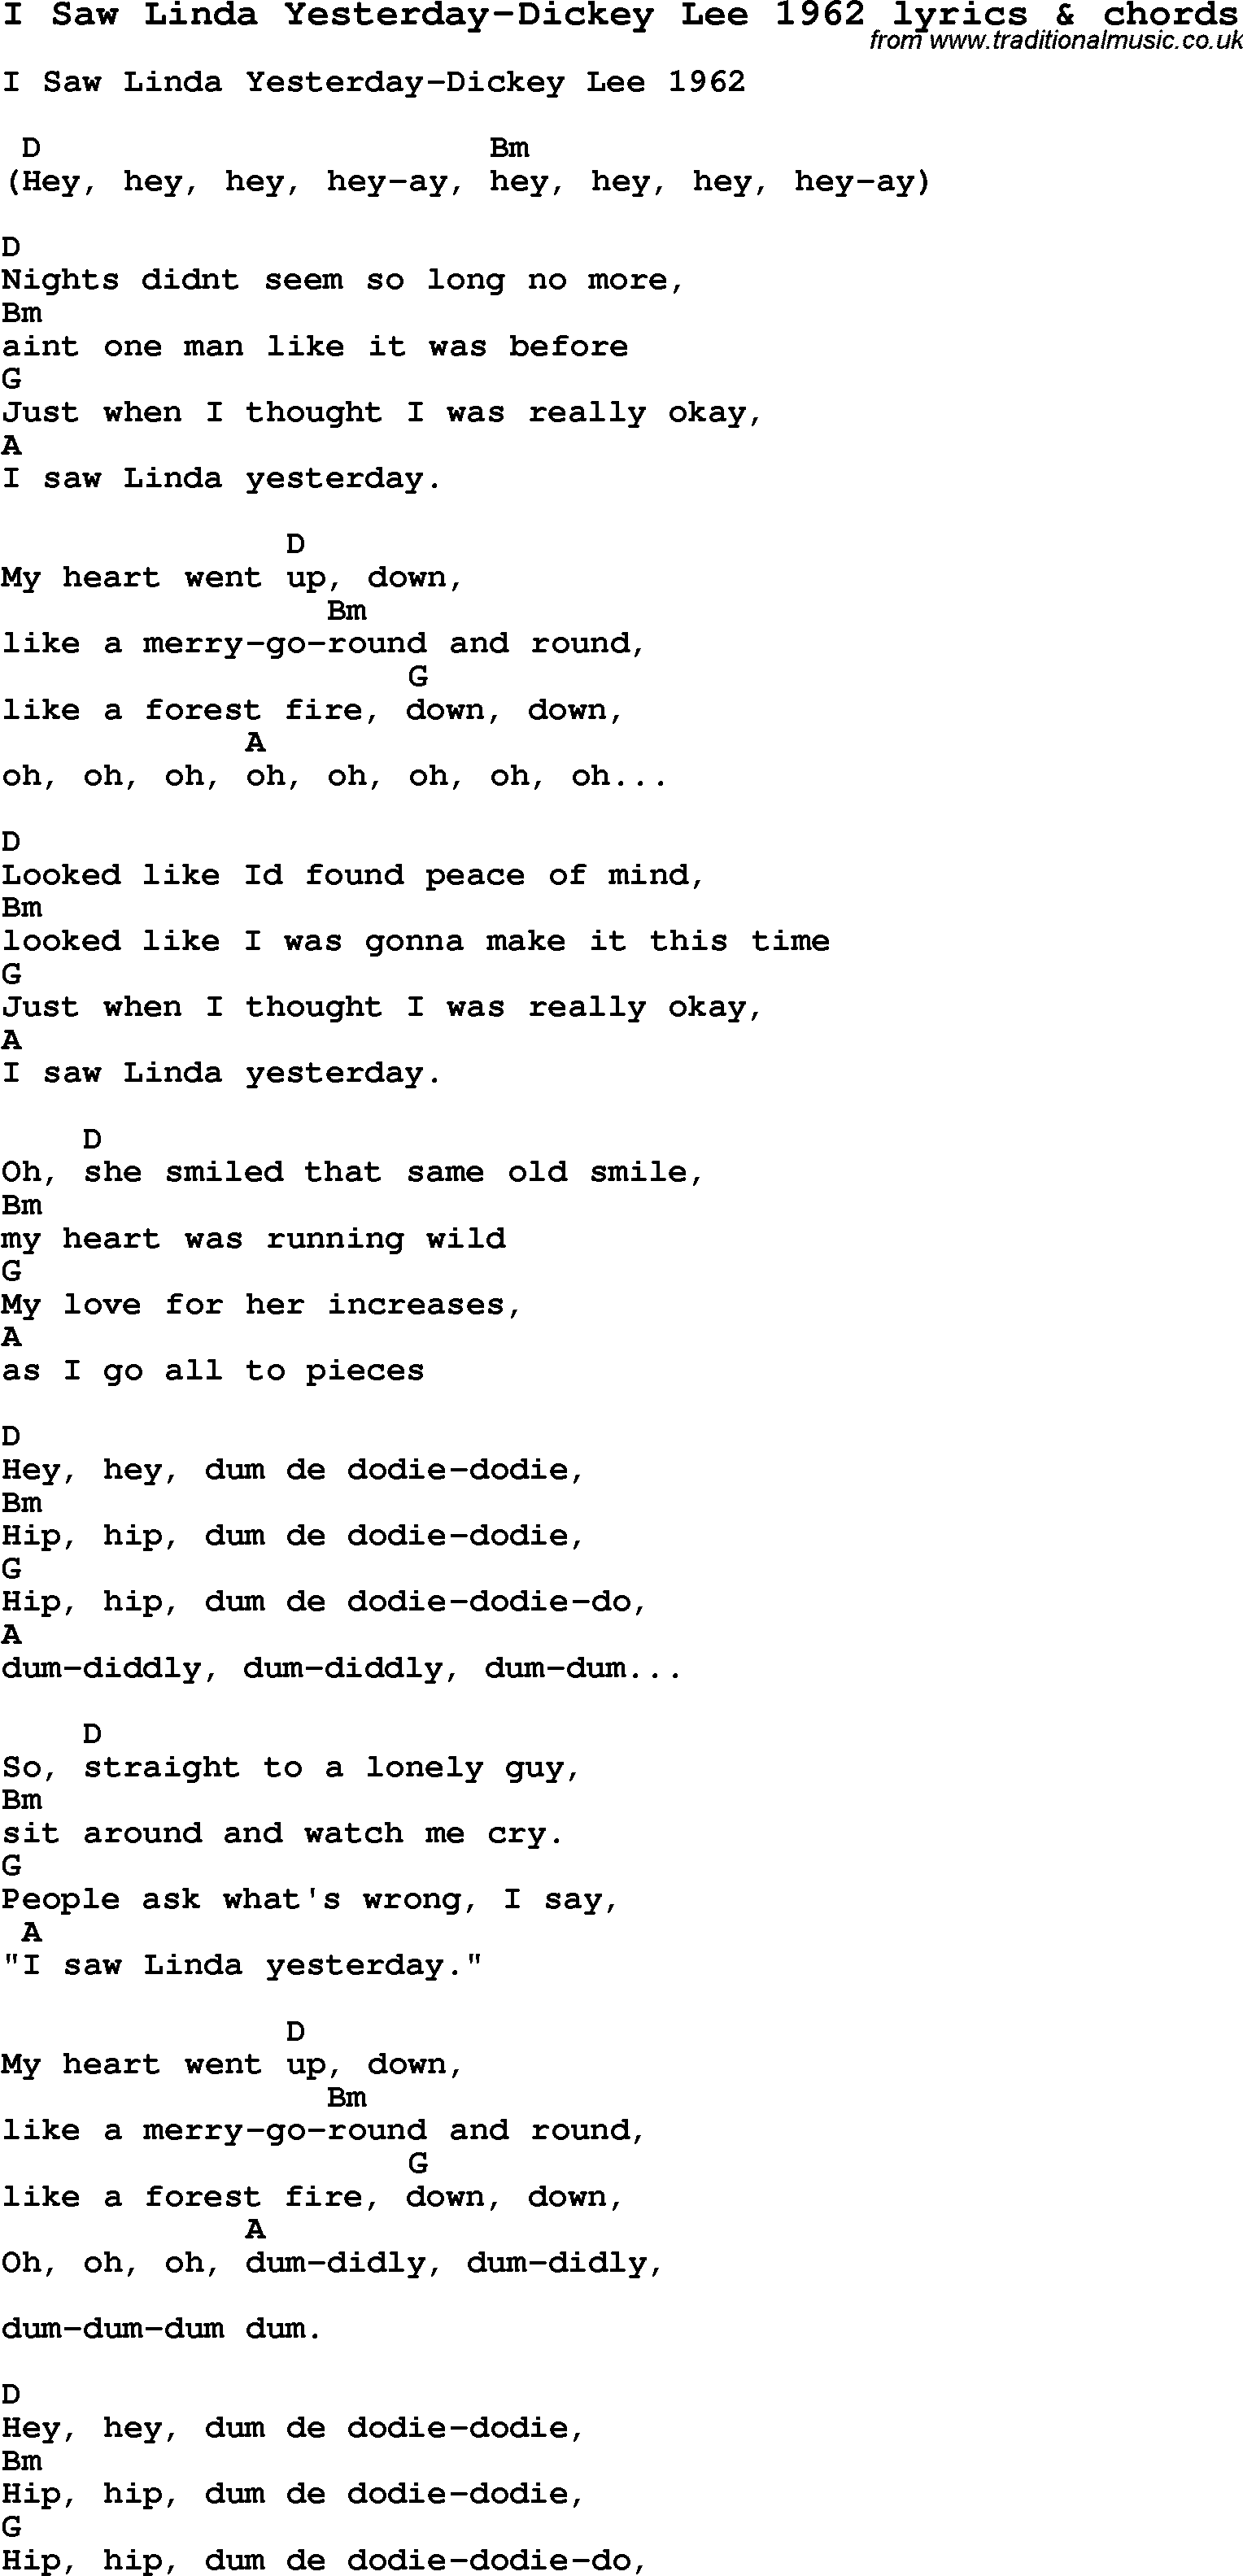 Love Song Lyrics for: I Saw Linda Yesterday-Dickey Lee 1962 with chords for Ukulele, Guitar Banjo etc.